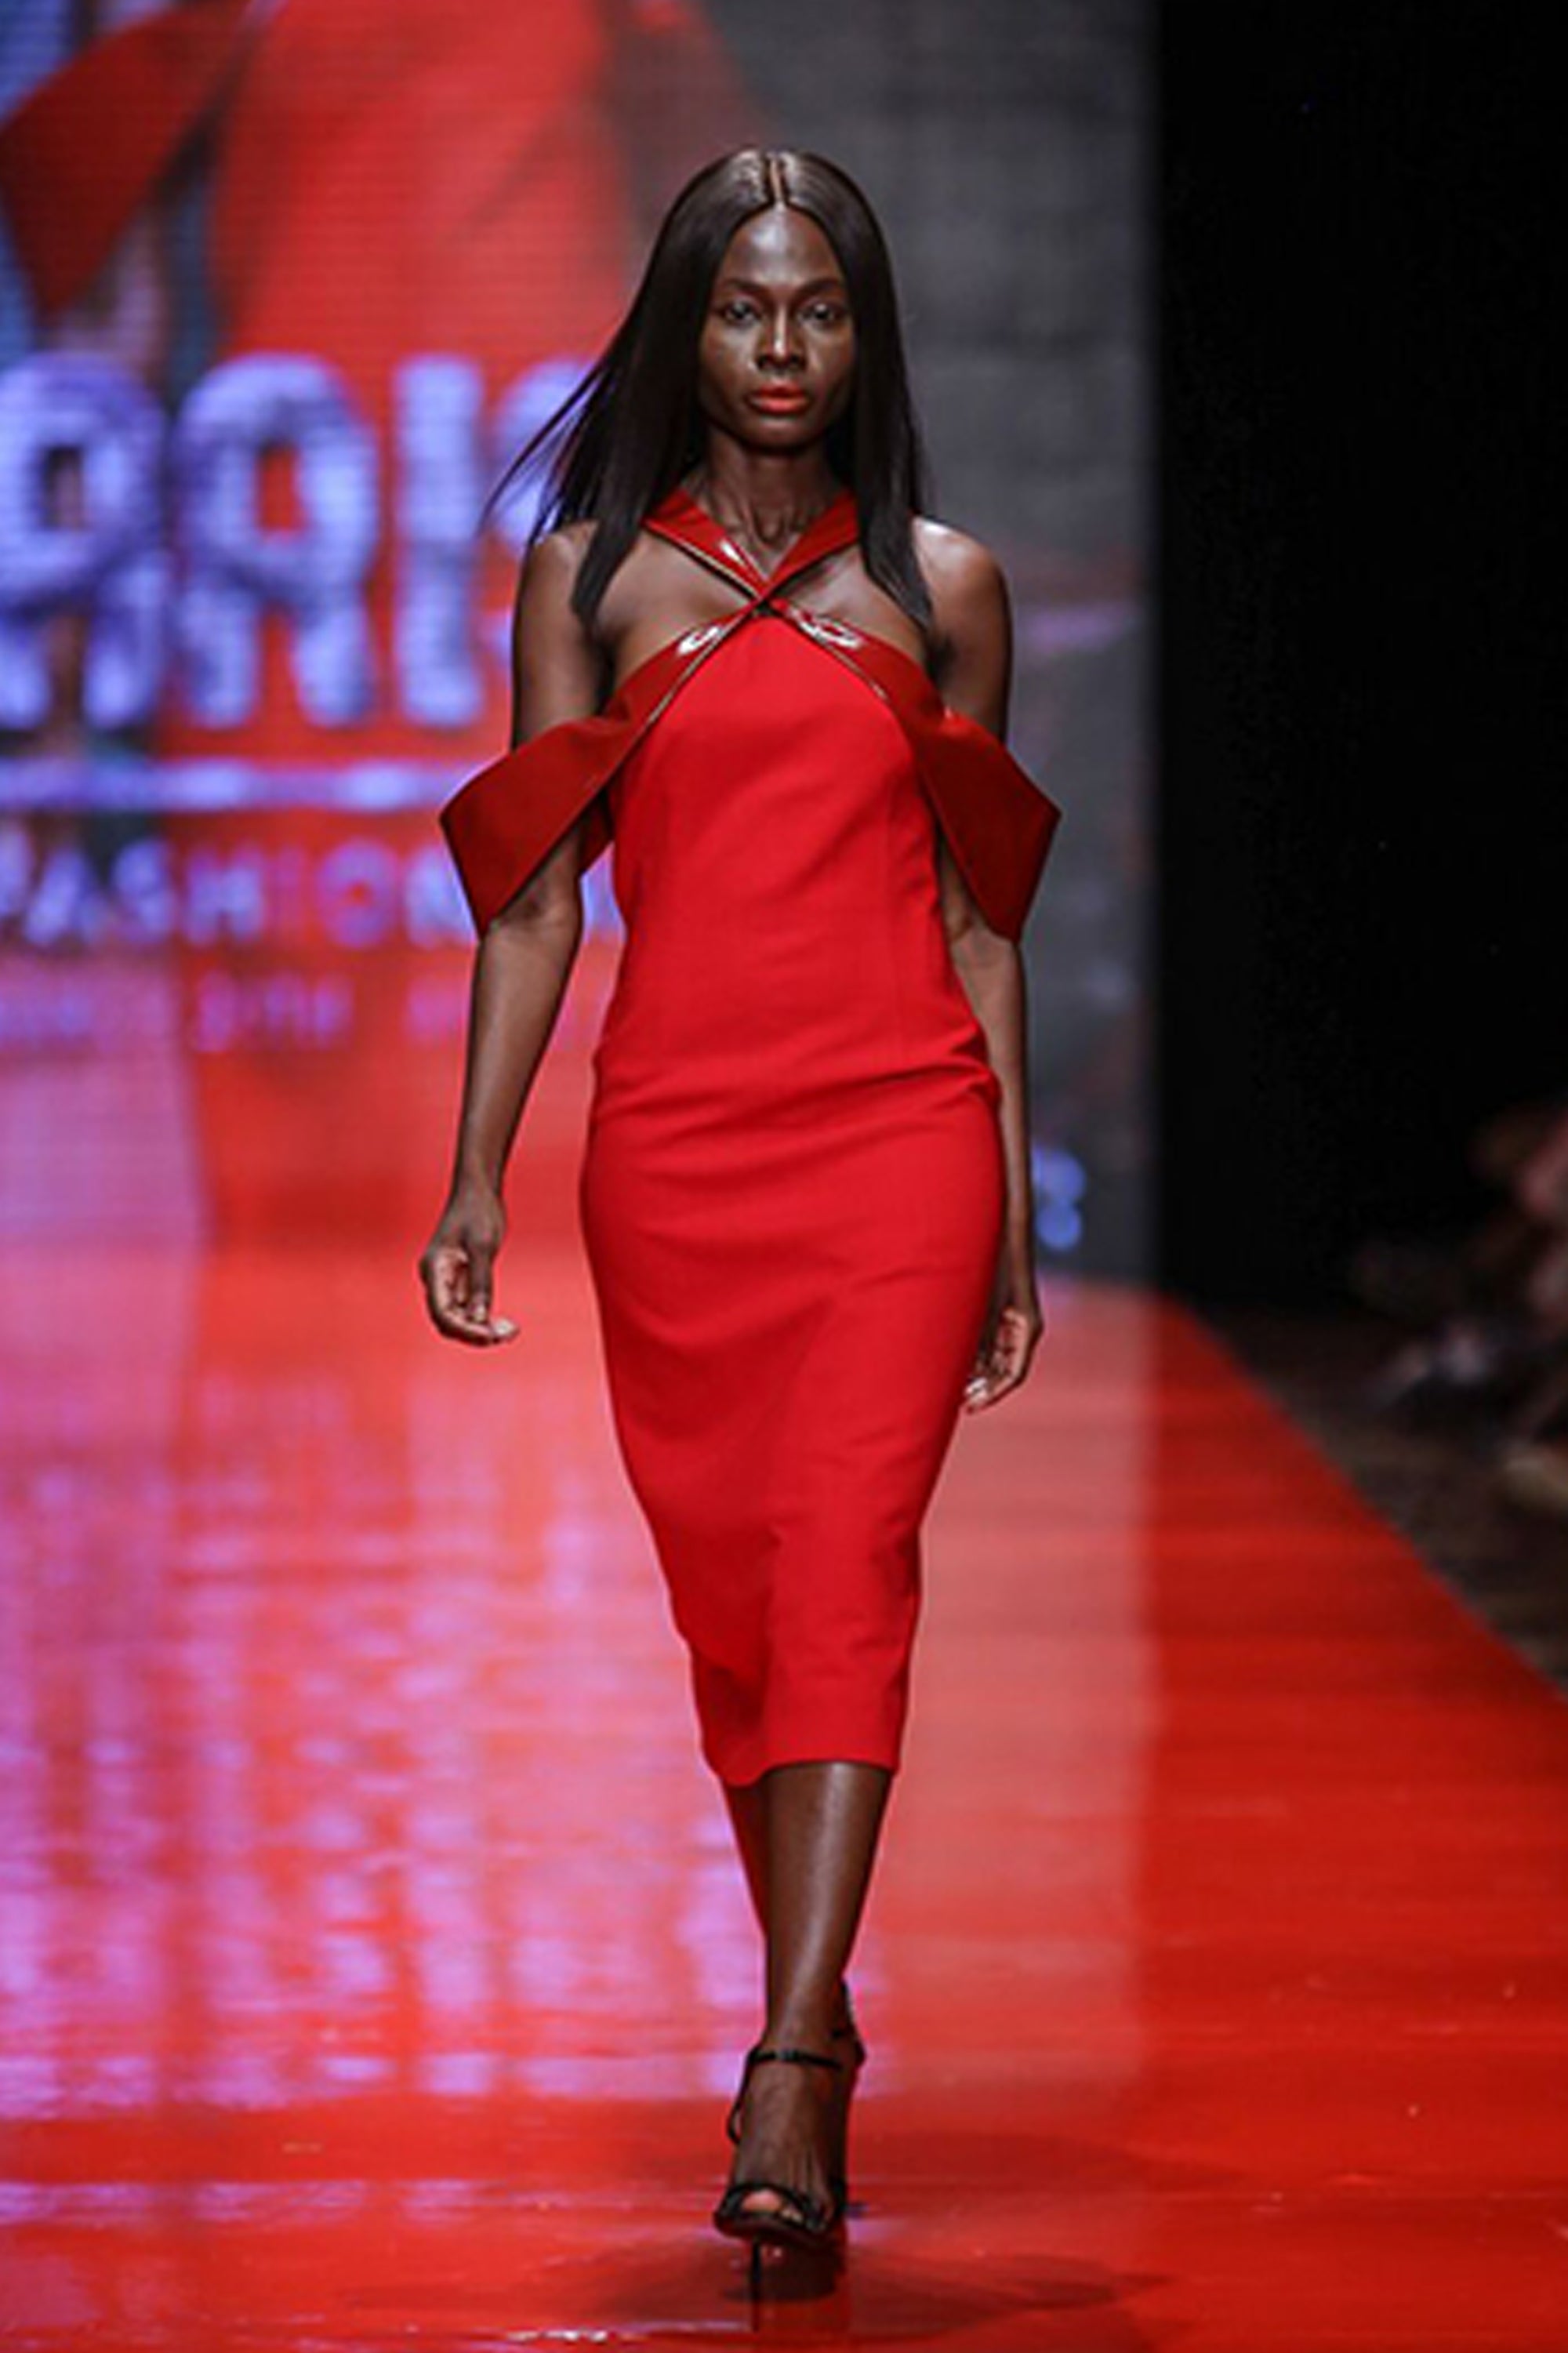 Washington Roberts at Arise Fashion Week - Red Kite Dress - Wool Crepe with Patent leather